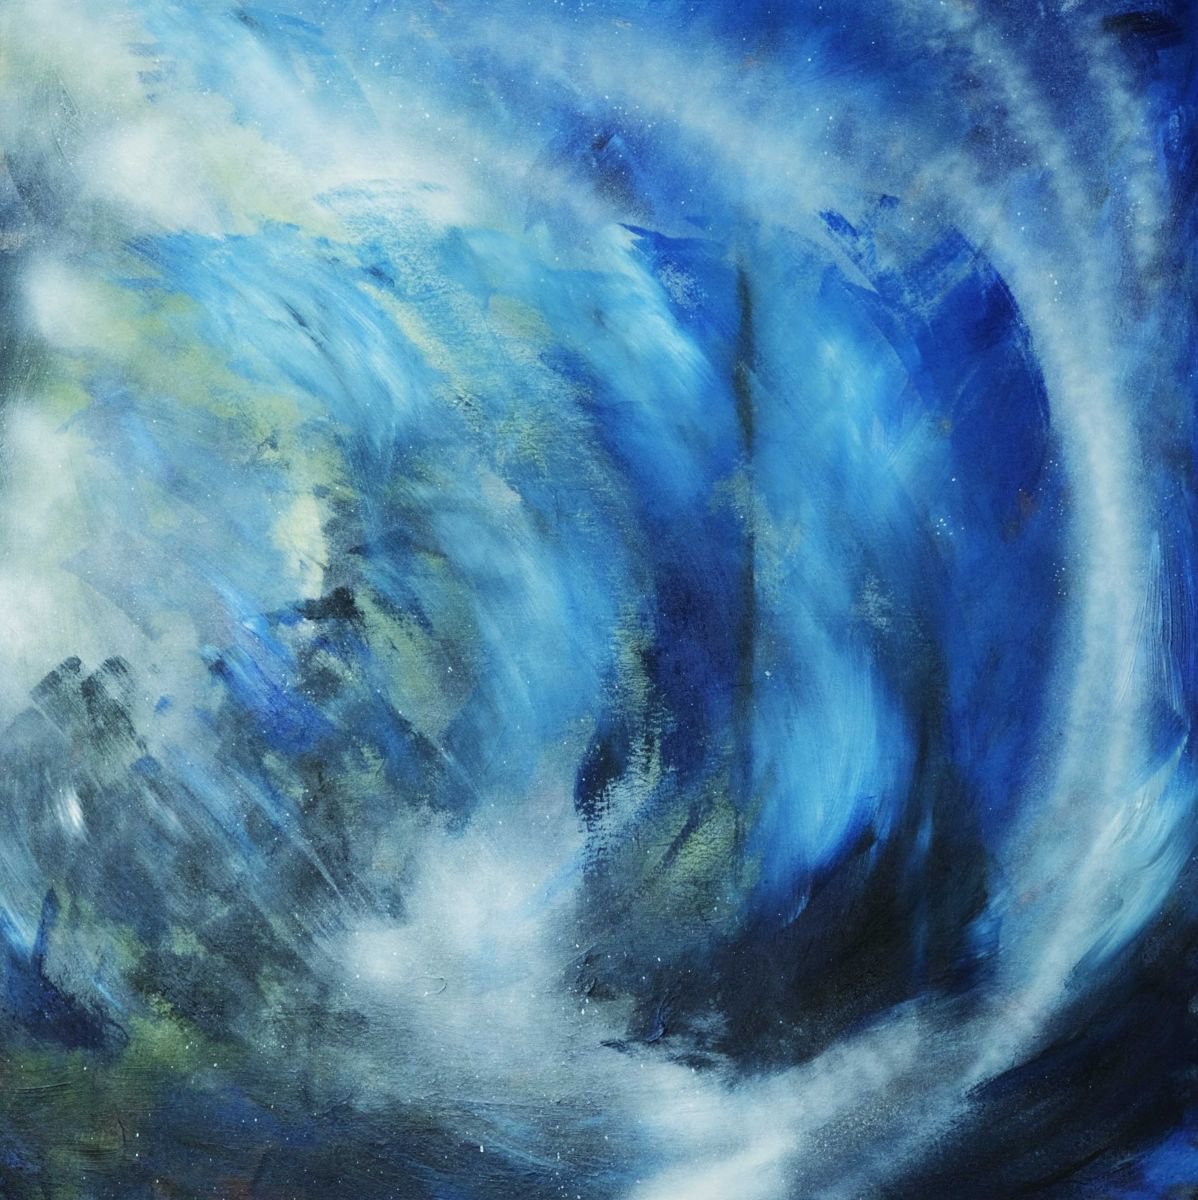 Waves by Neil Hemsley